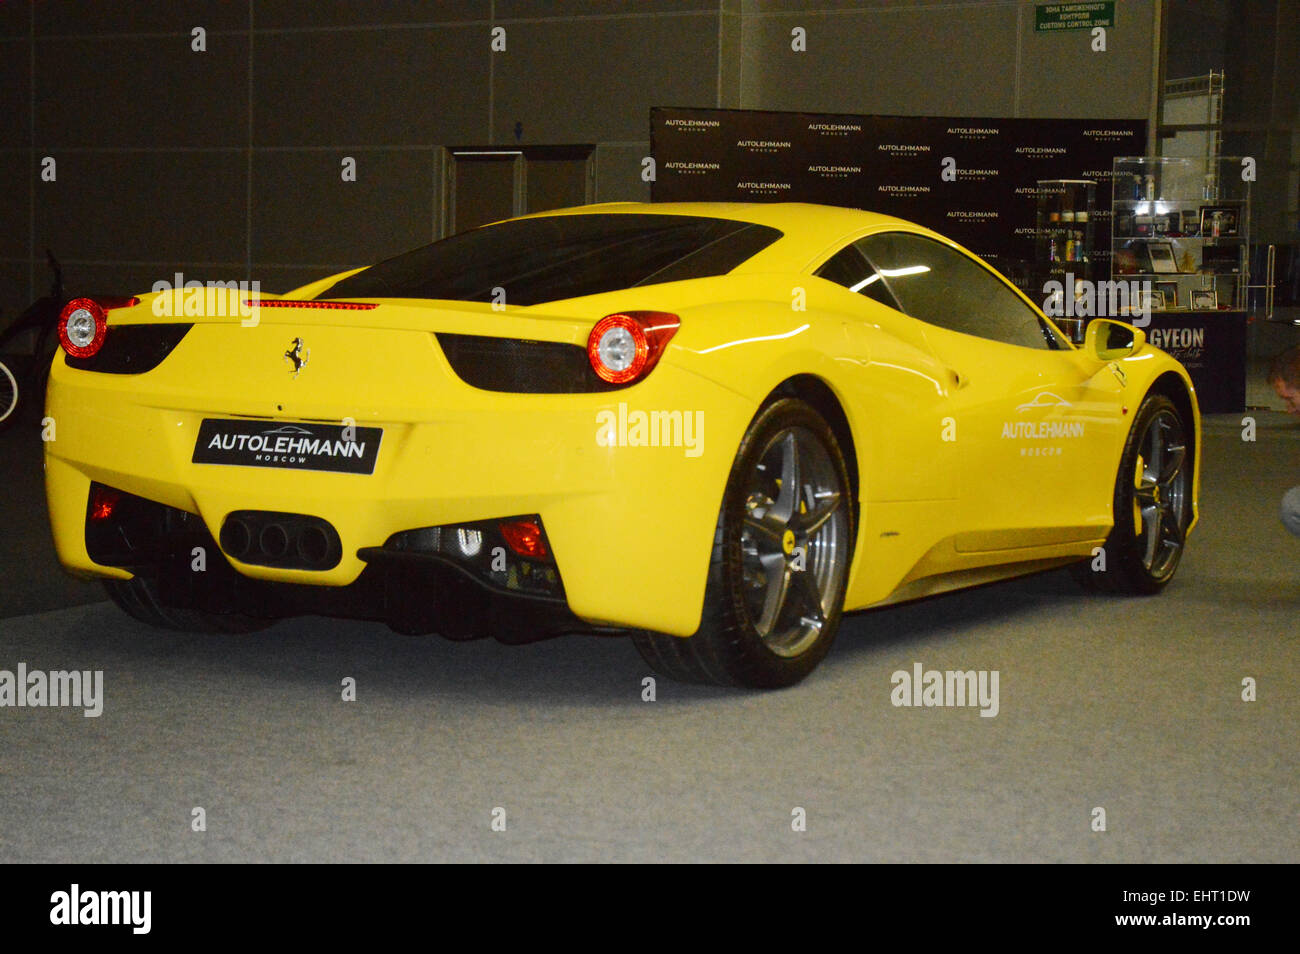 Ferrari yellow color in the showroom Stock Photo